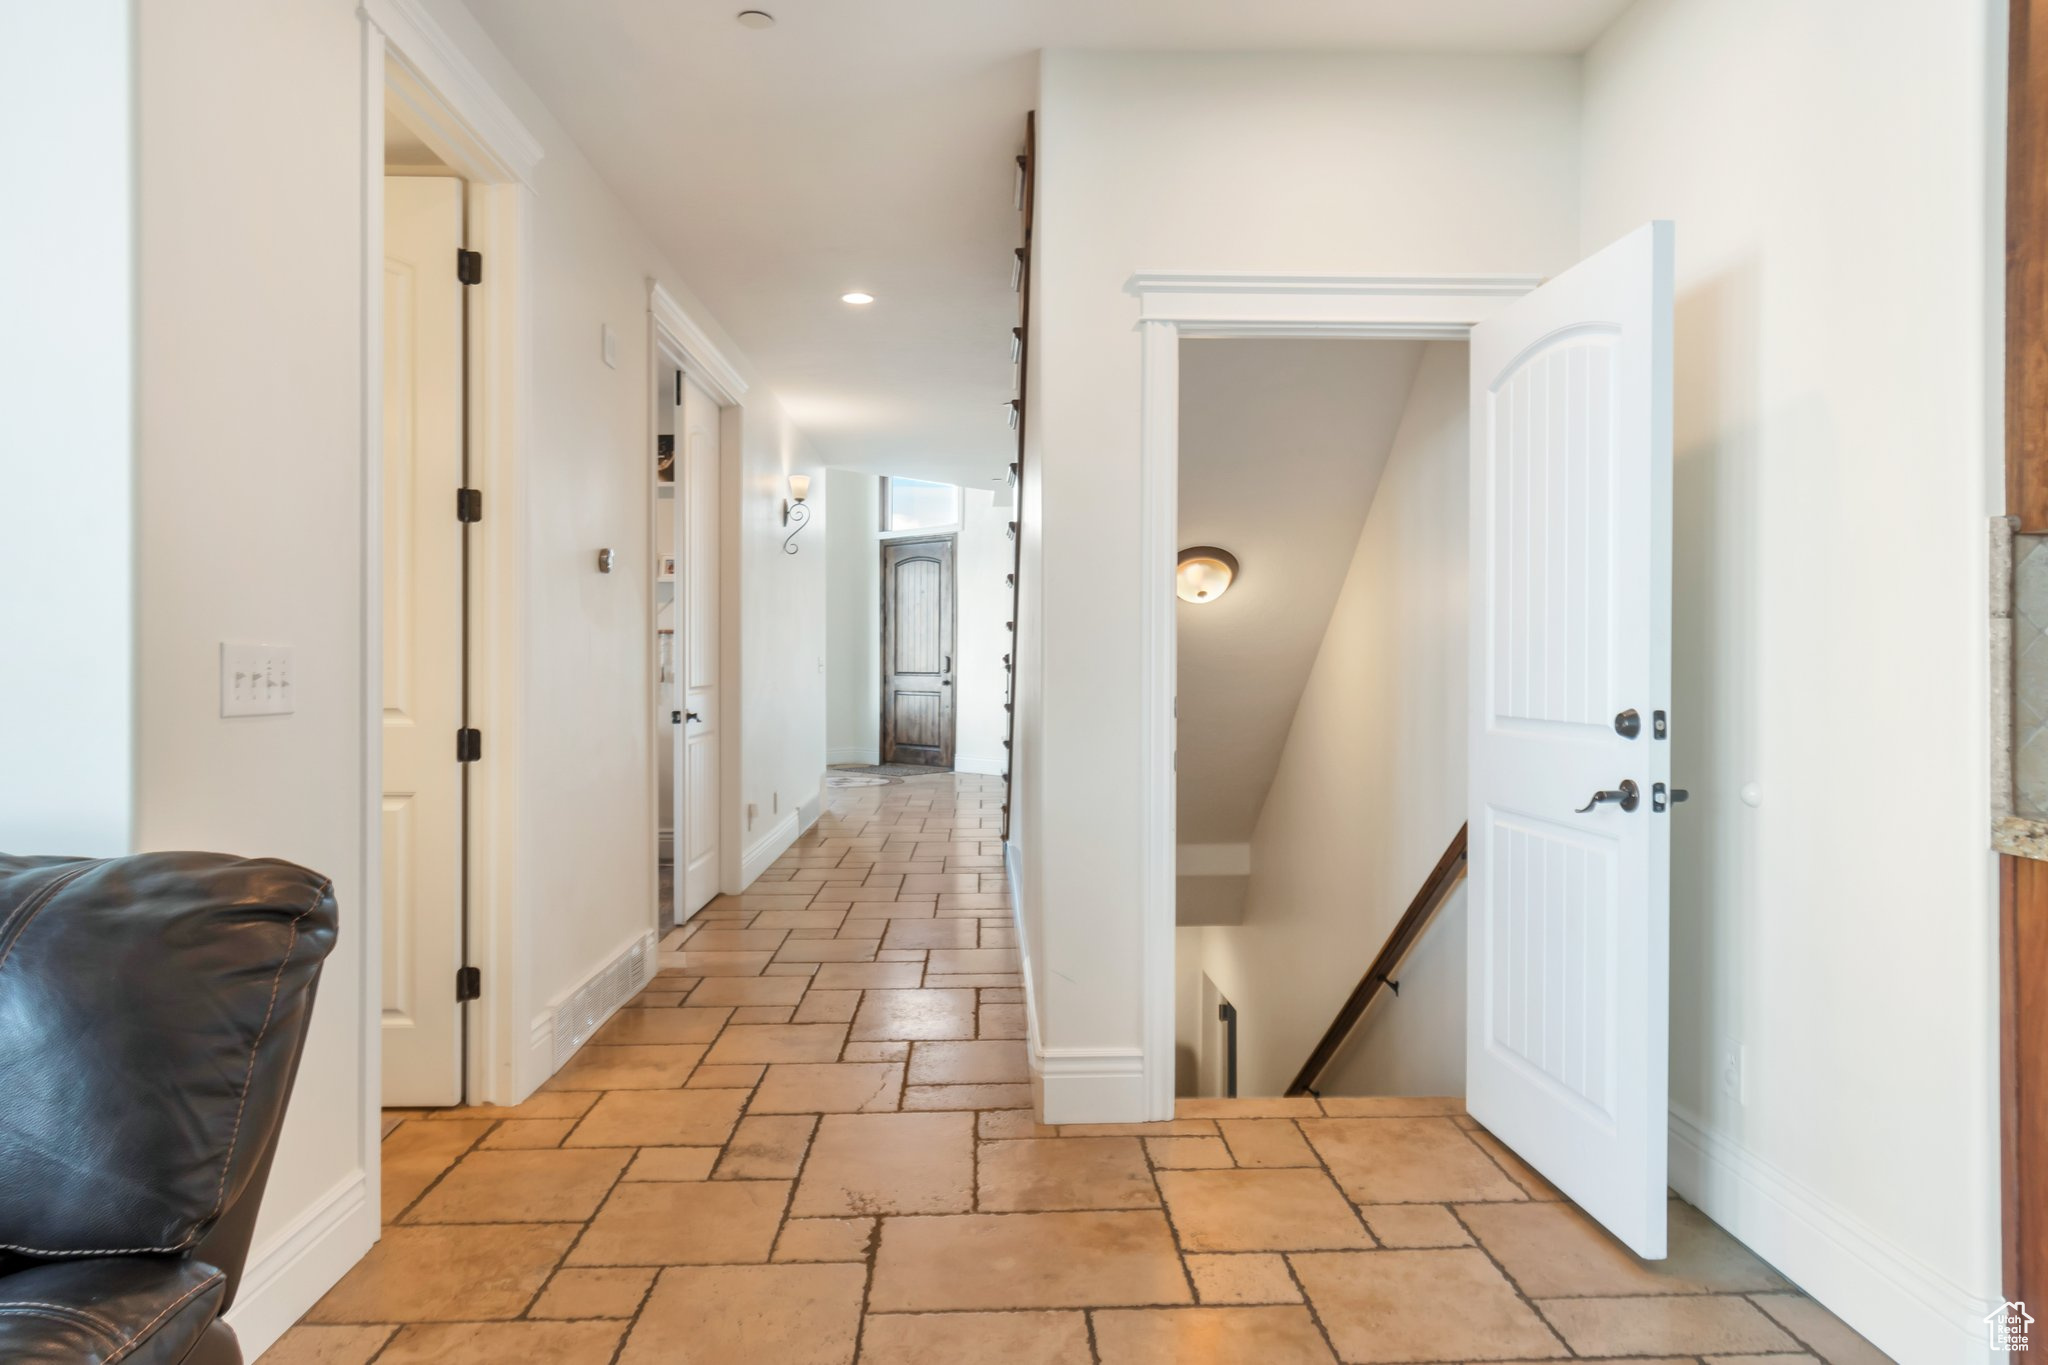 Corridor featuring light tile floors